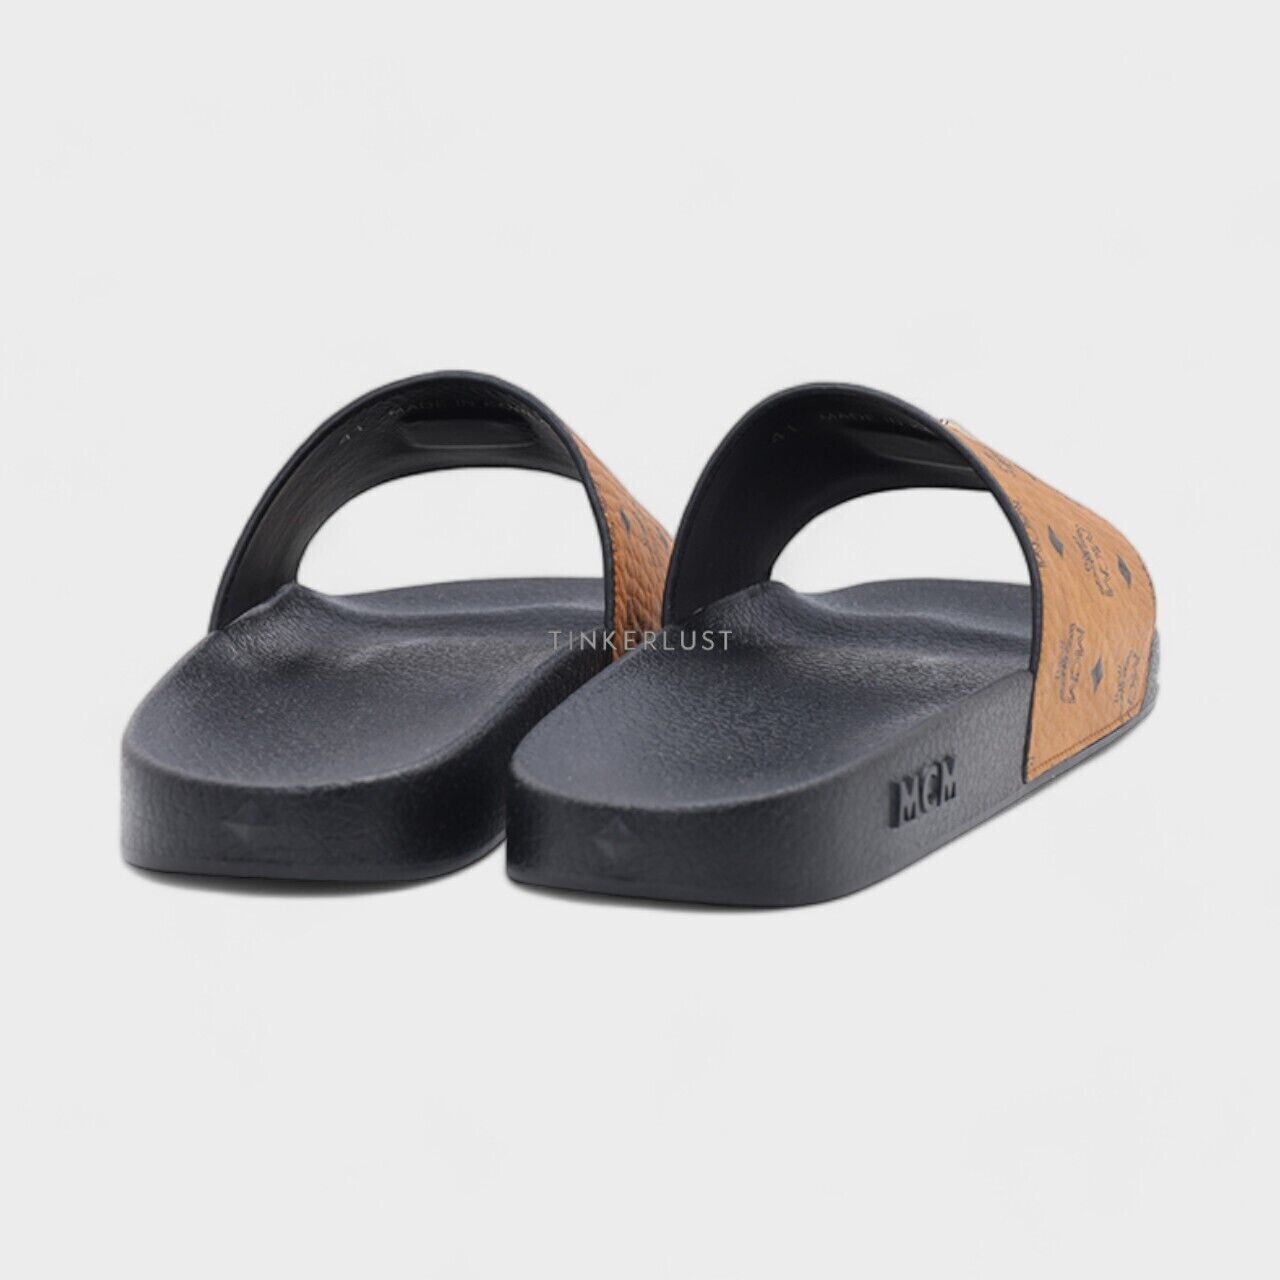 MCM Men Classic Rubber Slide in Cognac/Black with Logo Plate Sandals